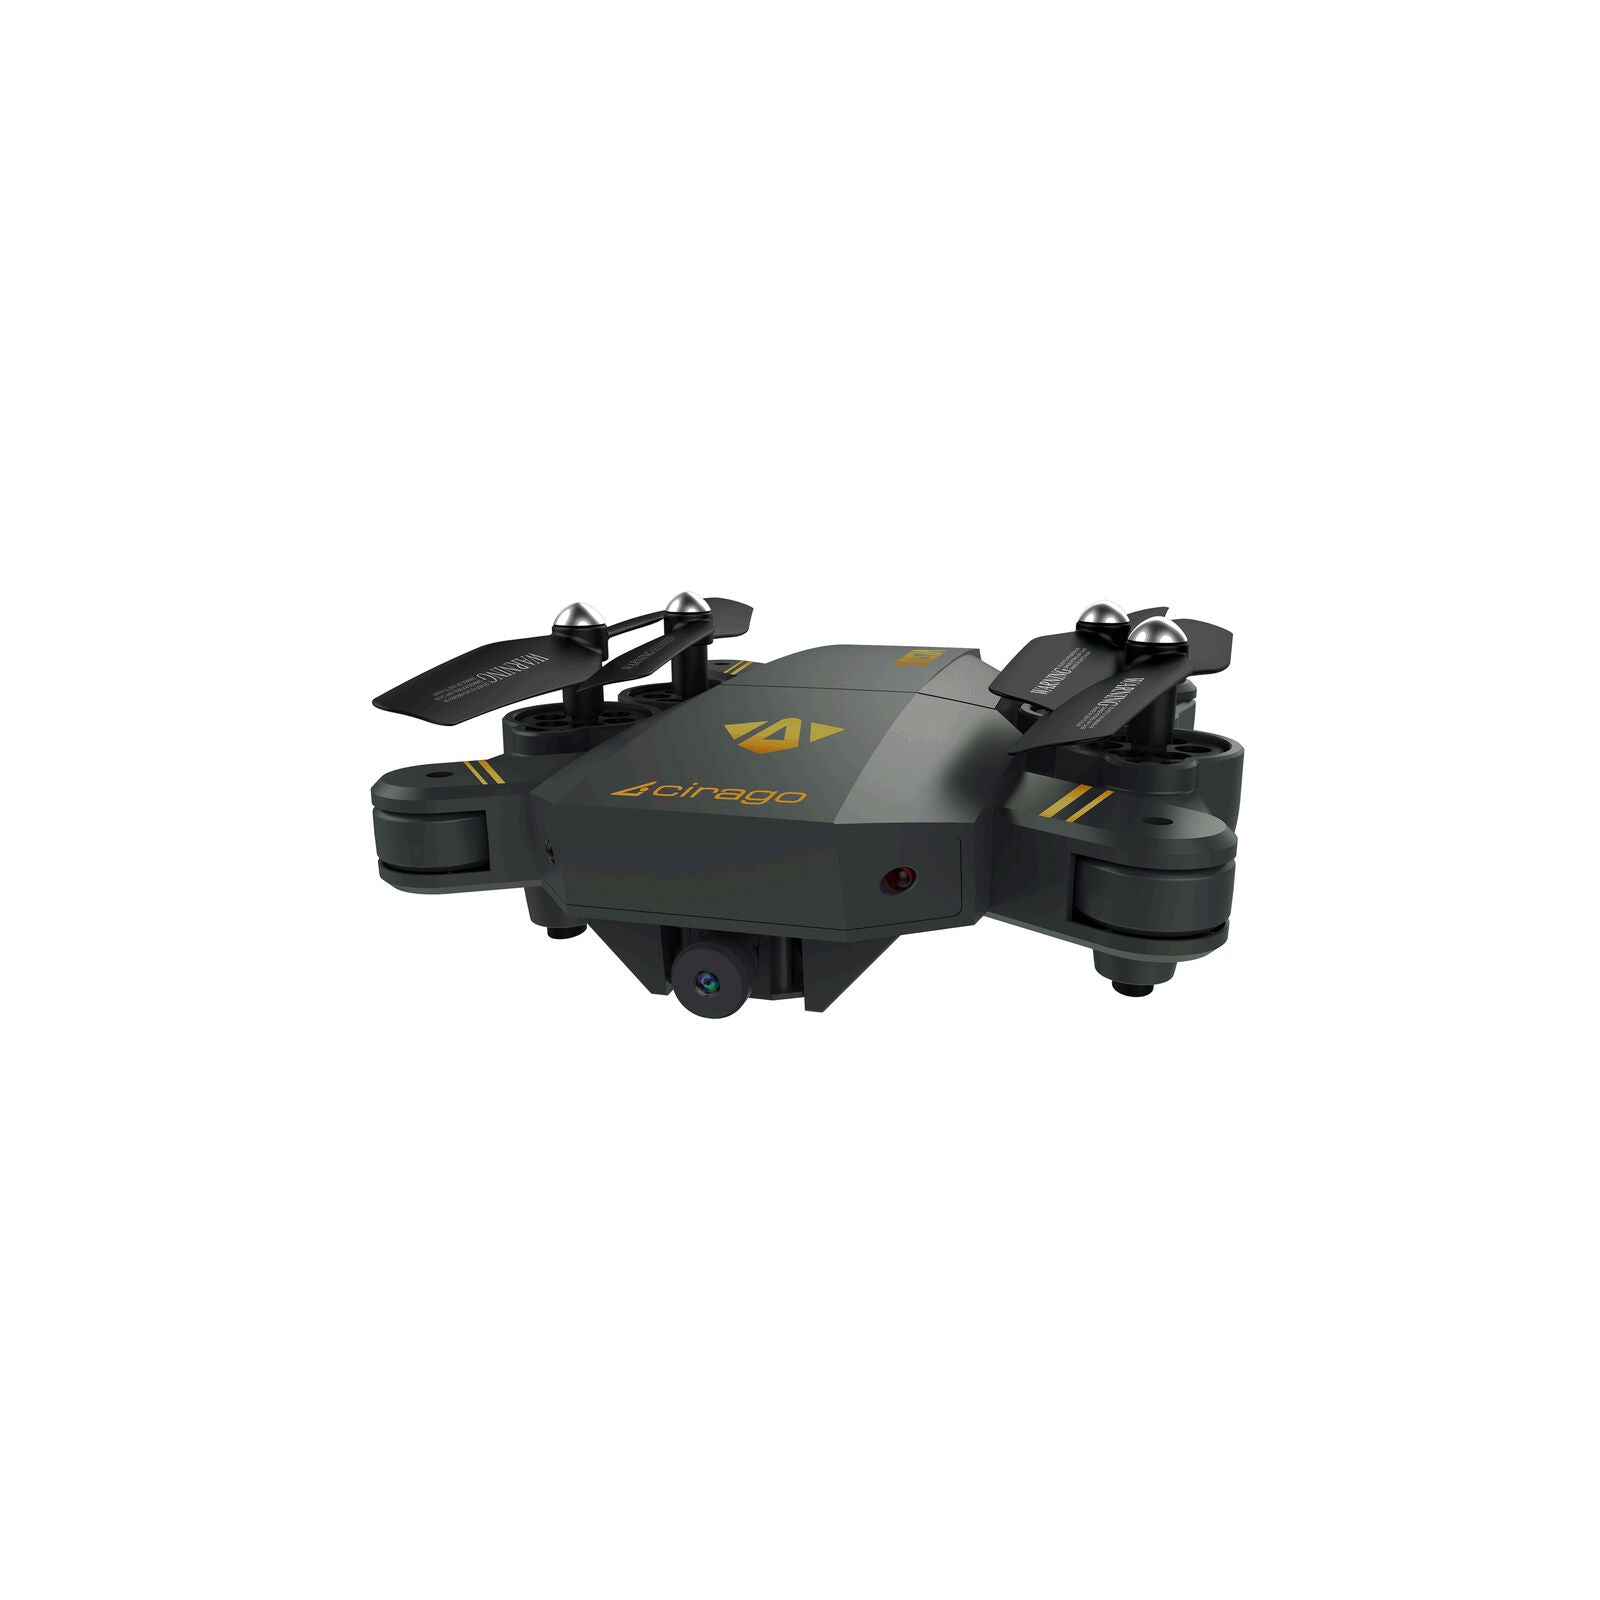 New 2021 RC Drone Selfie WIFI FPV Drone HD Wide Angle Camera Quadcopter